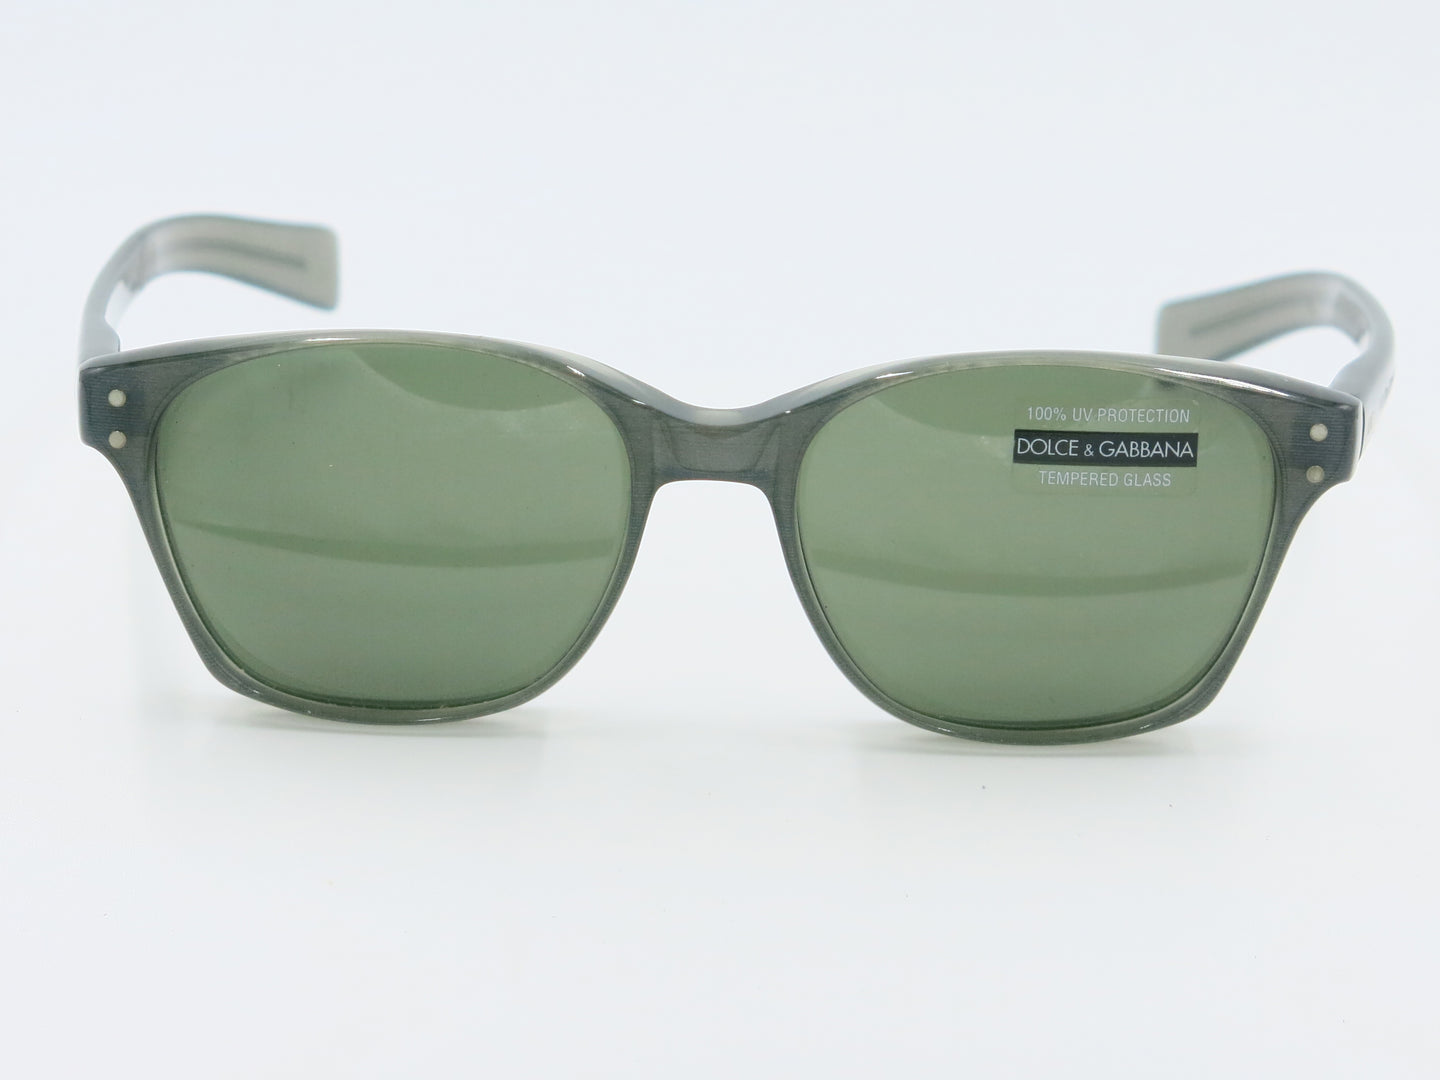 Dolce & Gabbana Sunglasses DG 7192 G | Sunglasses by Dolce & Gabbana | Friedman & Sons